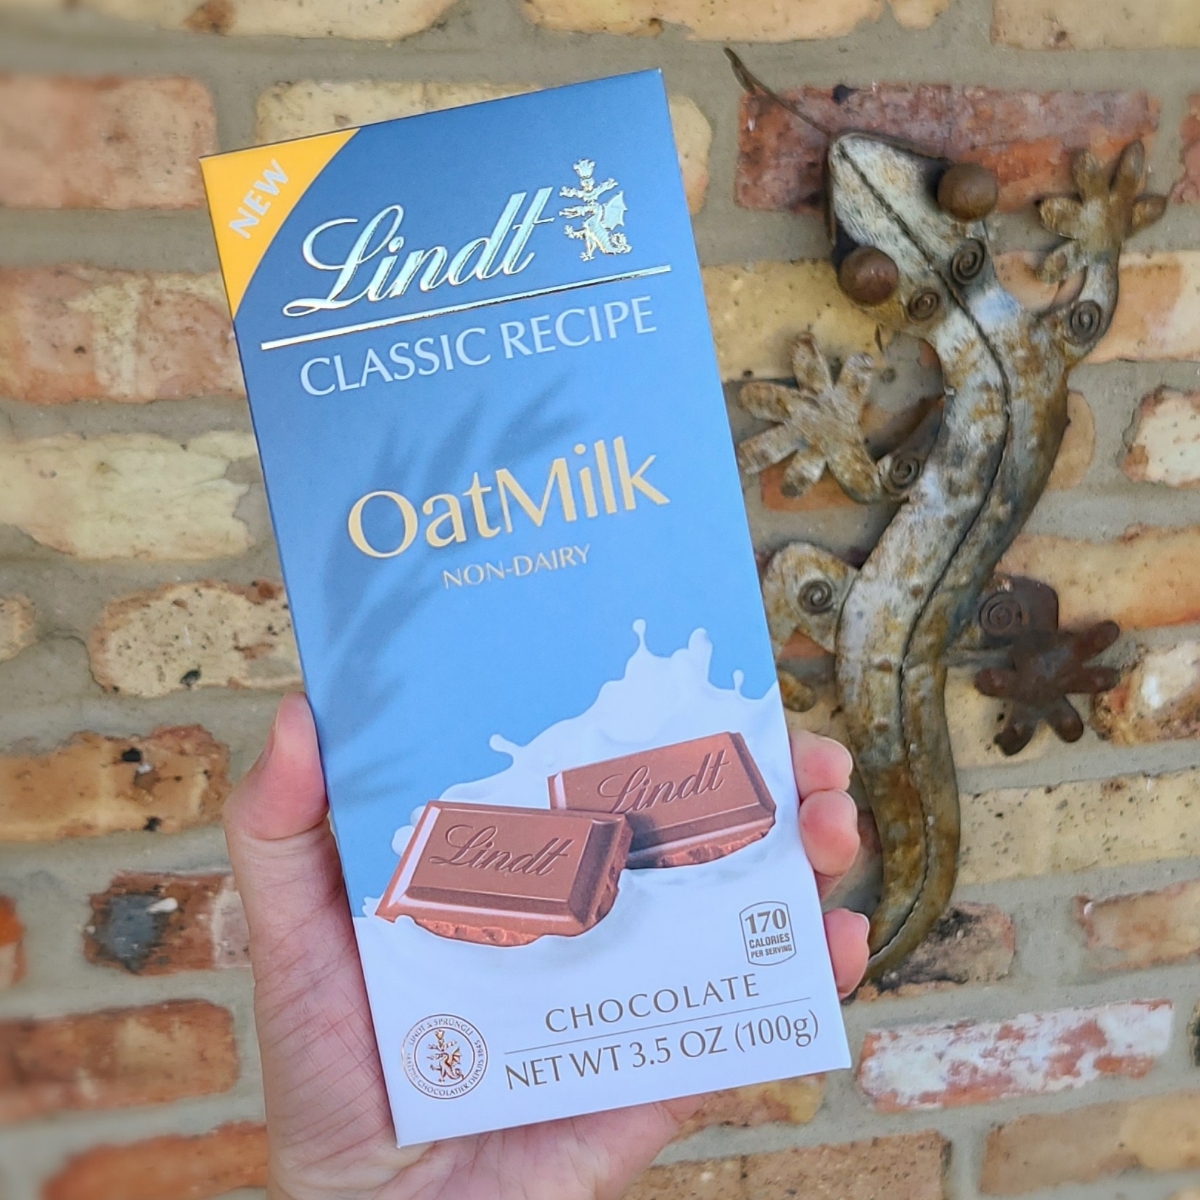 Lindt Classic Recipe Oat Milk Plain Chocolate Bar